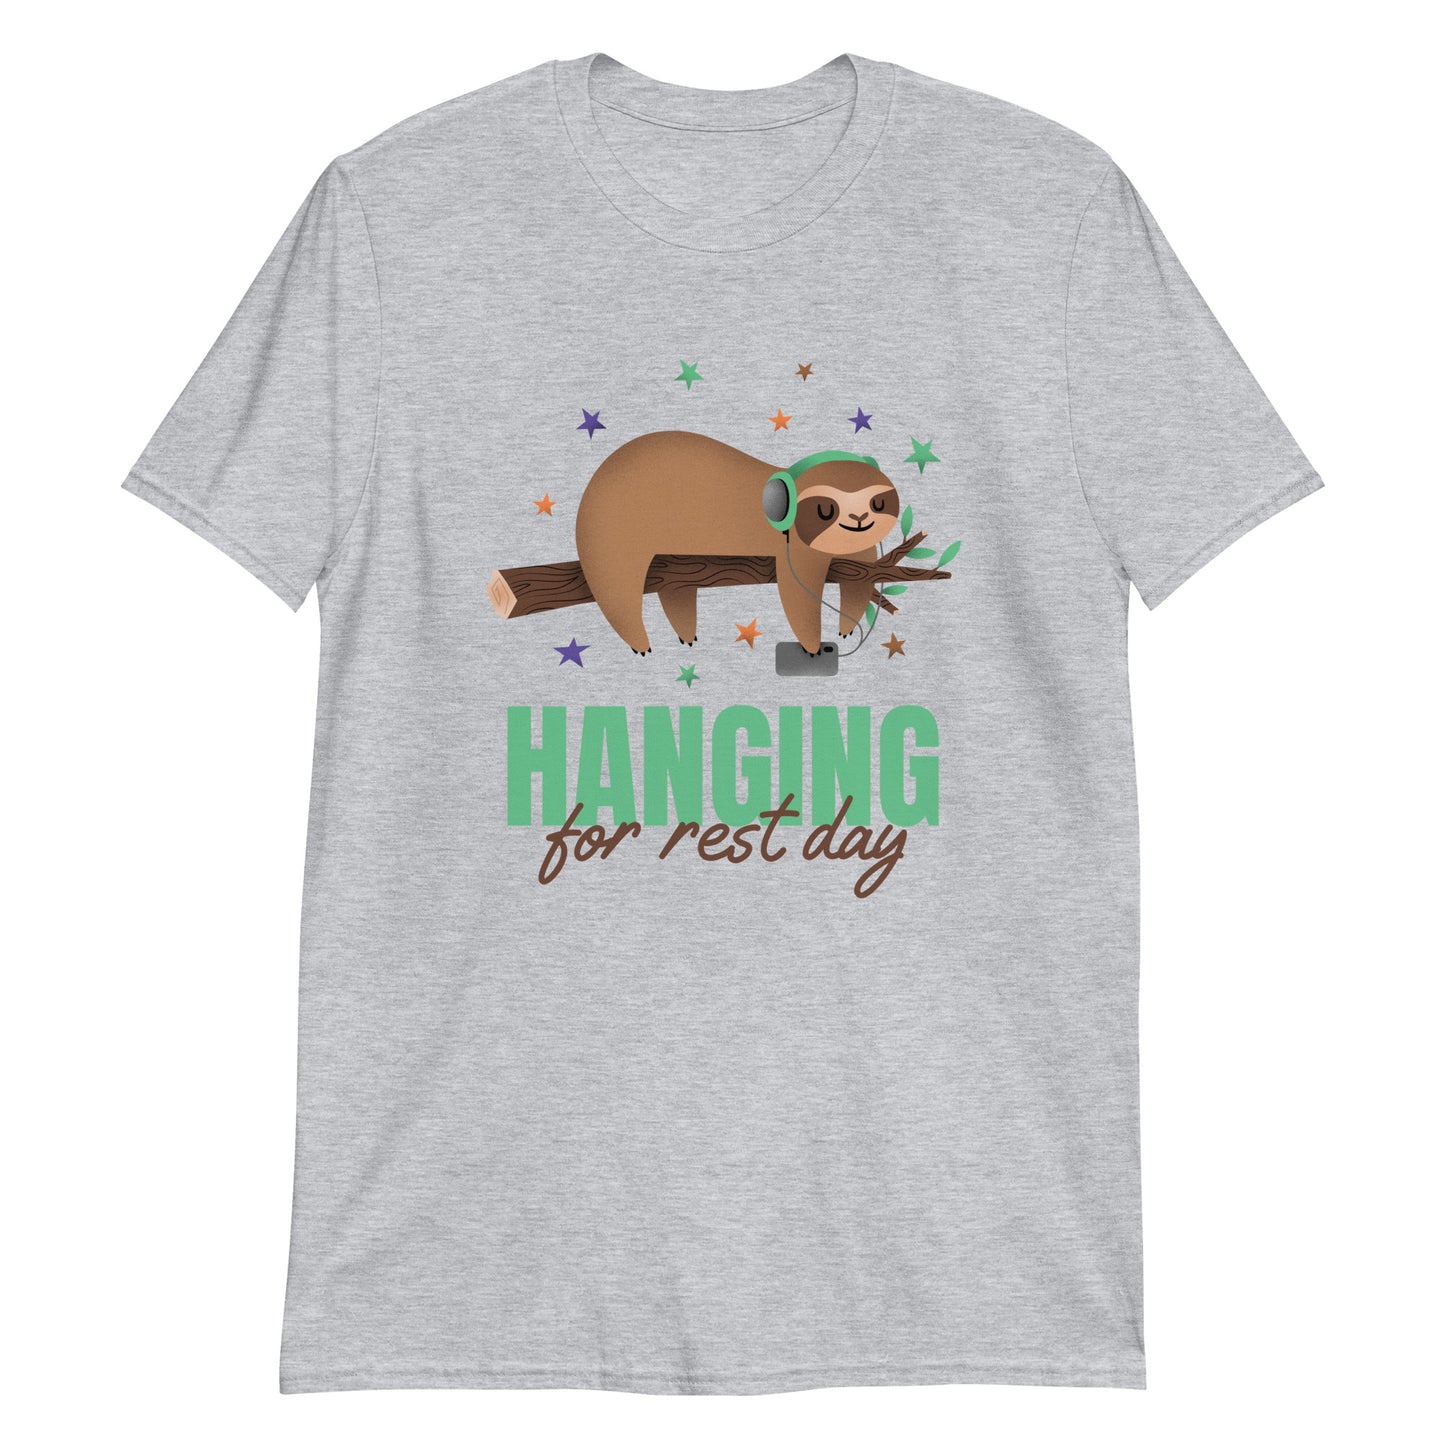 Hanging For Rest Day - Short-Sleeve Unisex T-Shirt Sport Grey Unisex T-shirt Animal